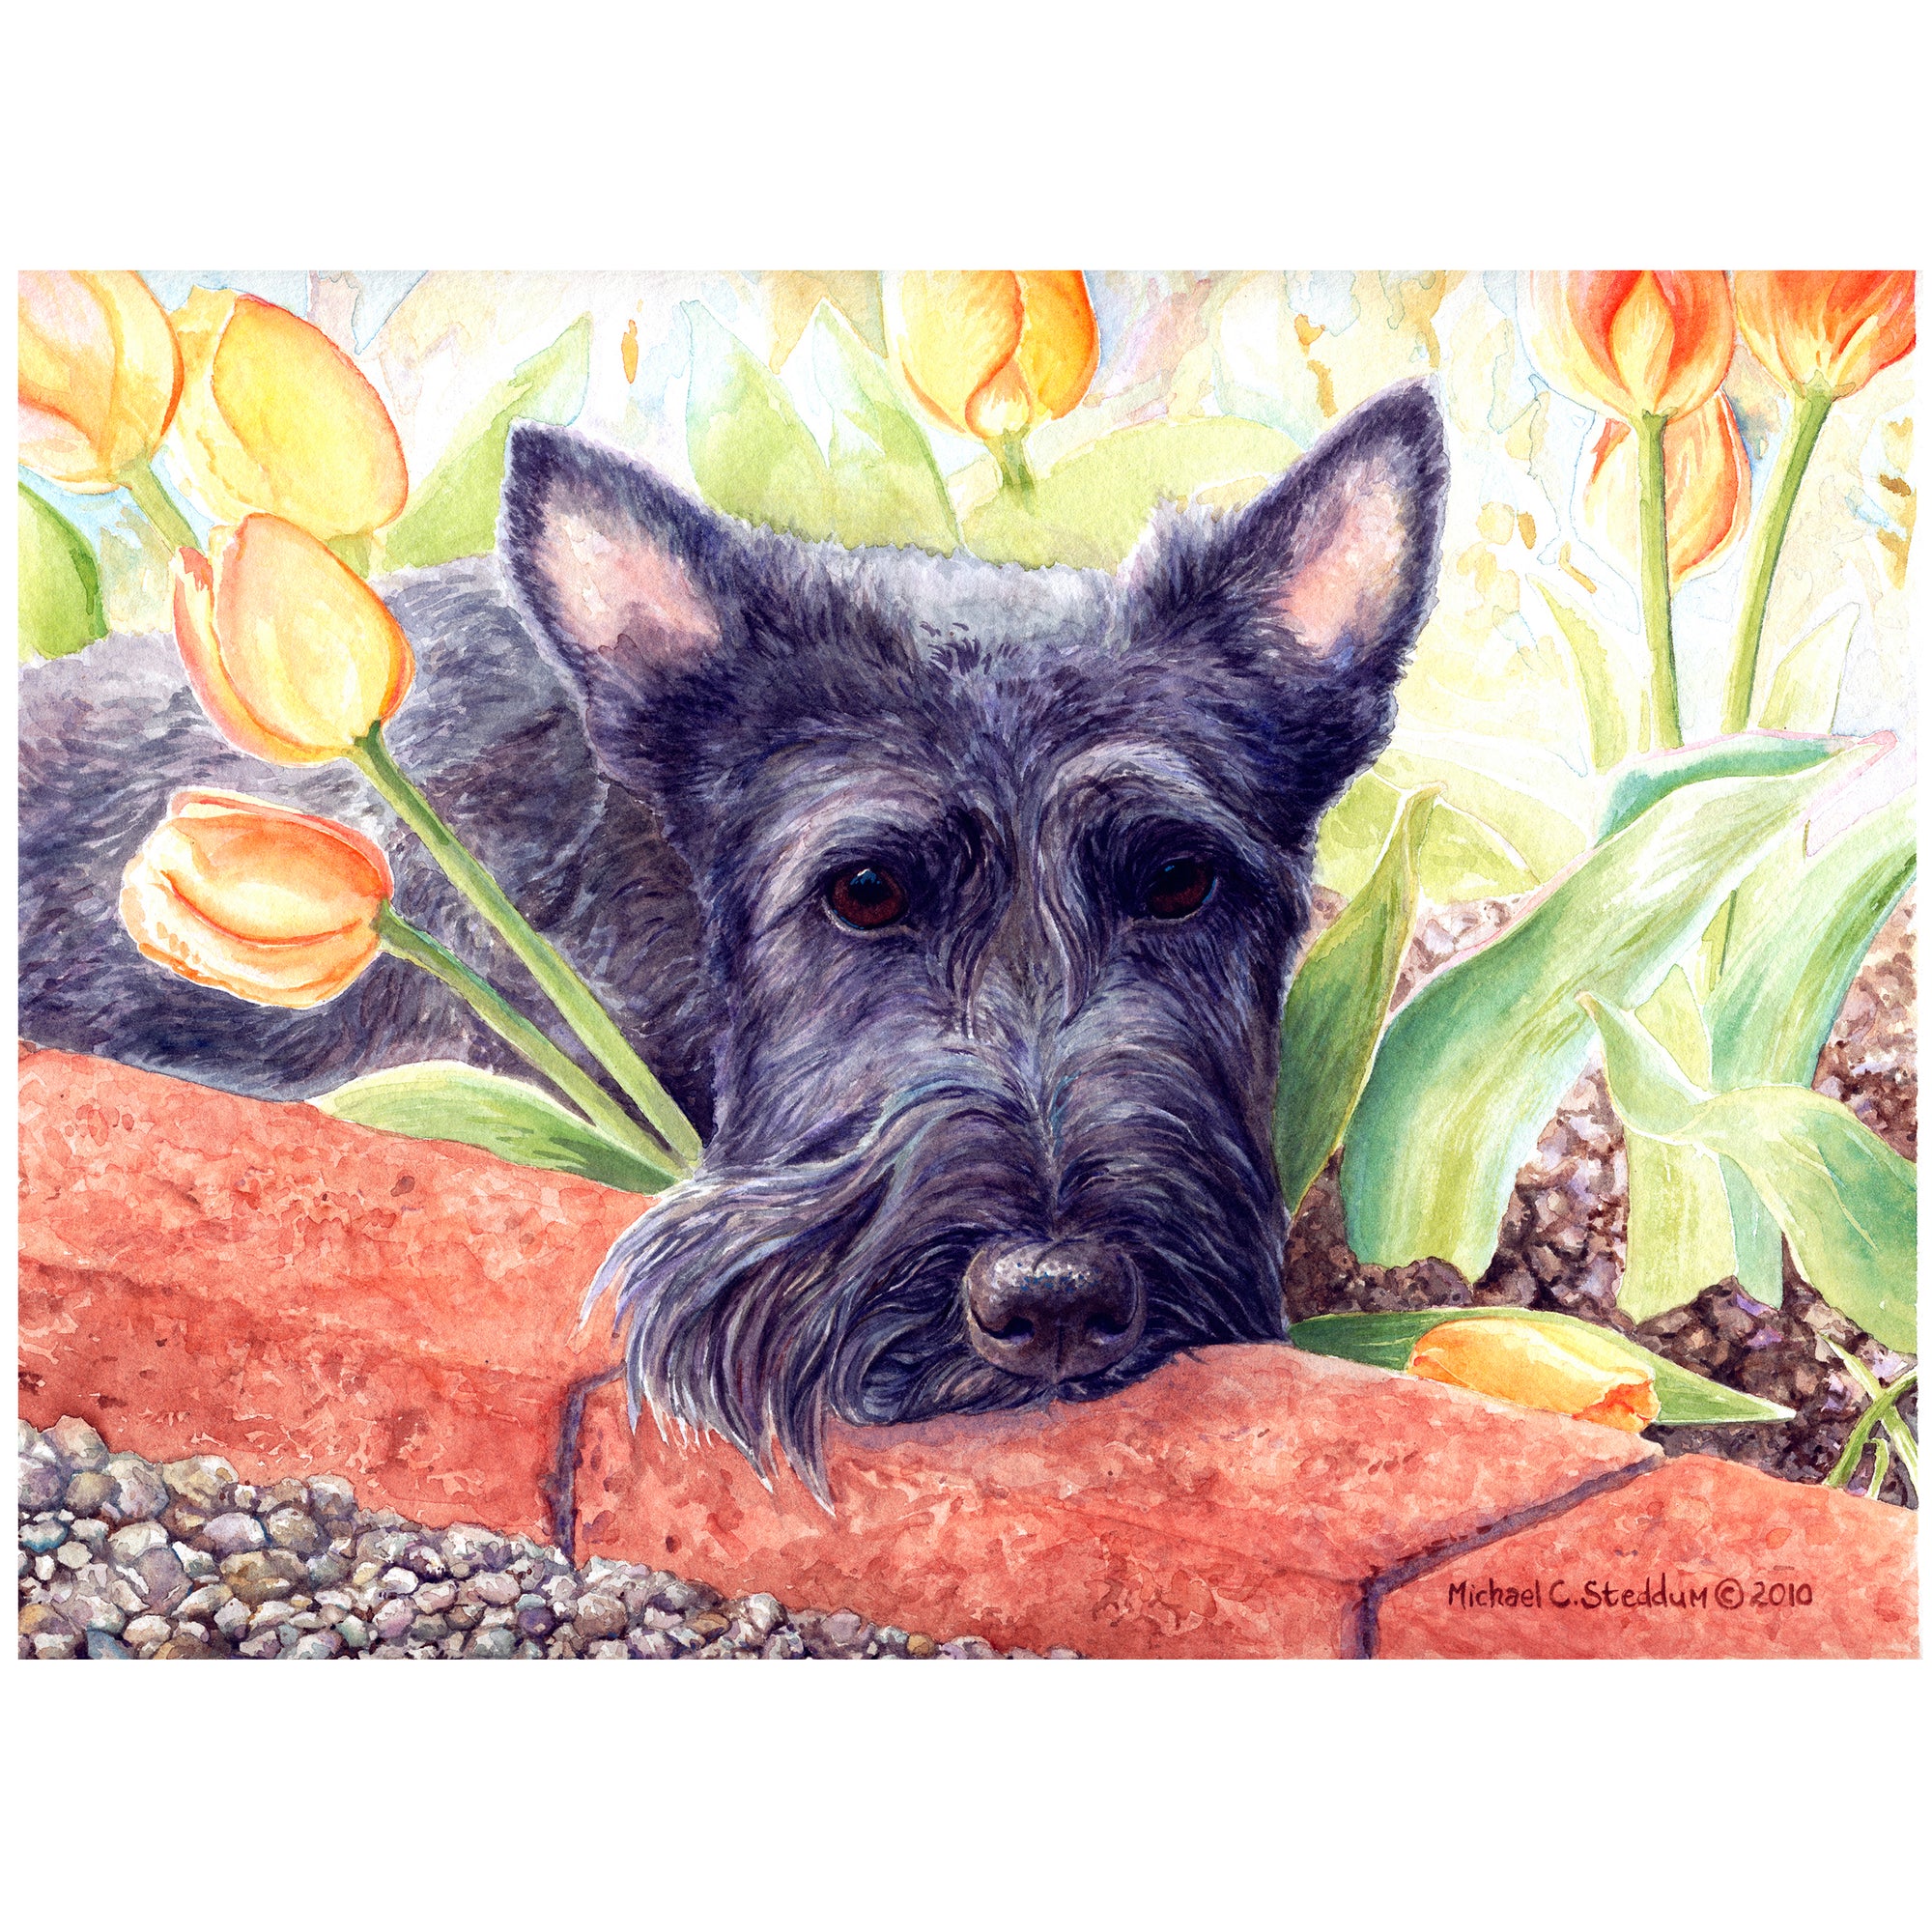 Scottish Terrier Art Reproduction Print - "Scottie Tulips" by Michael Steddum - Limited Edition Signed and Numbered Scottish Terrier Art Print - Awesome Scottie Gift